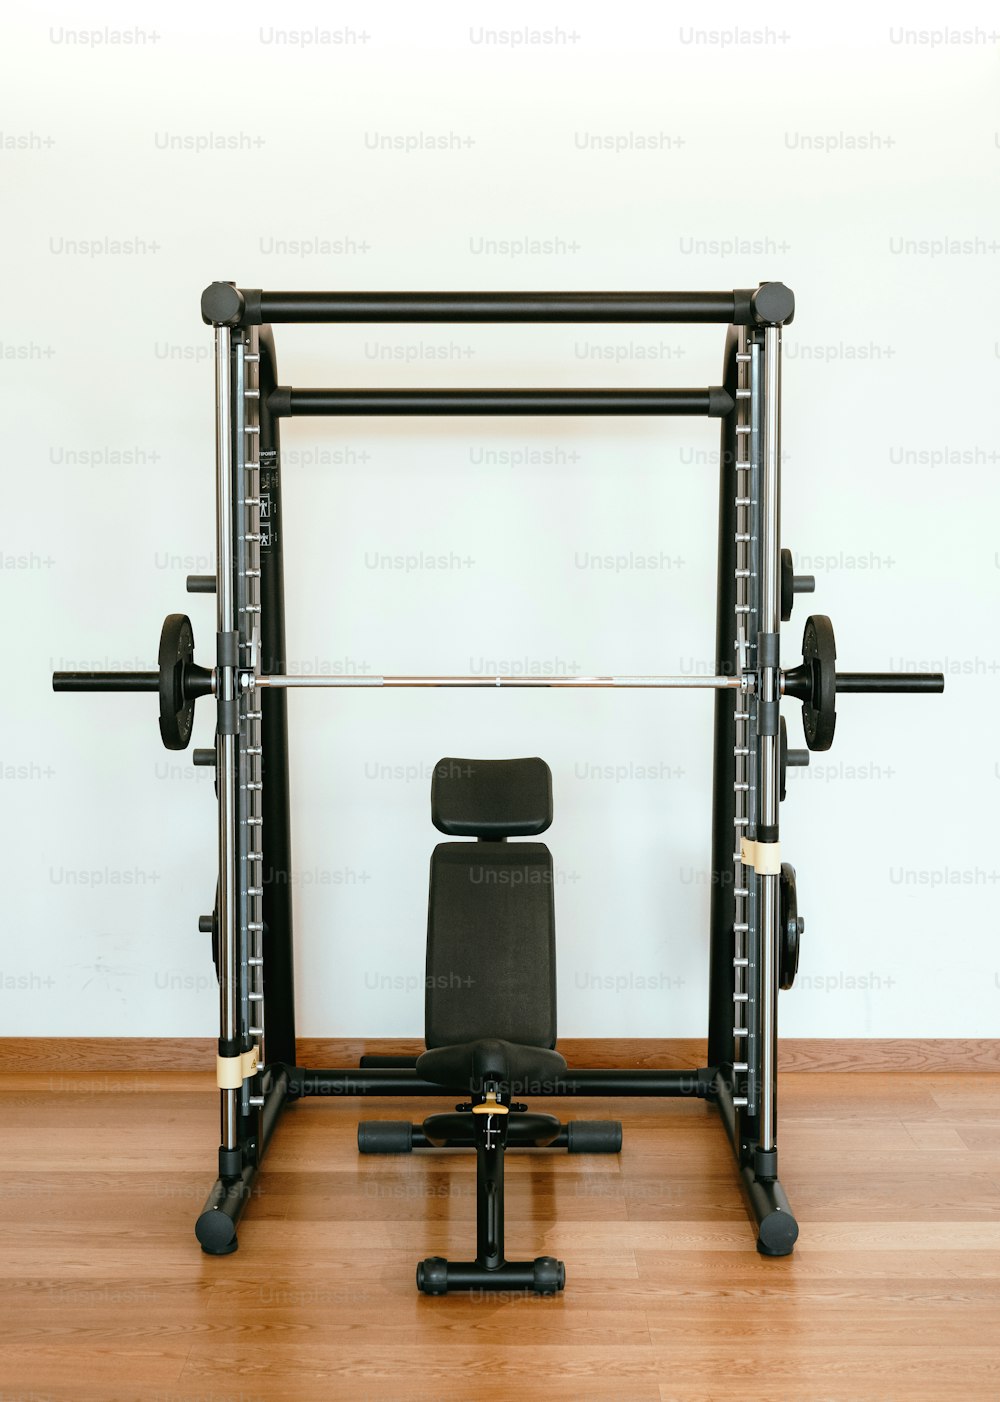 a black exercise machine